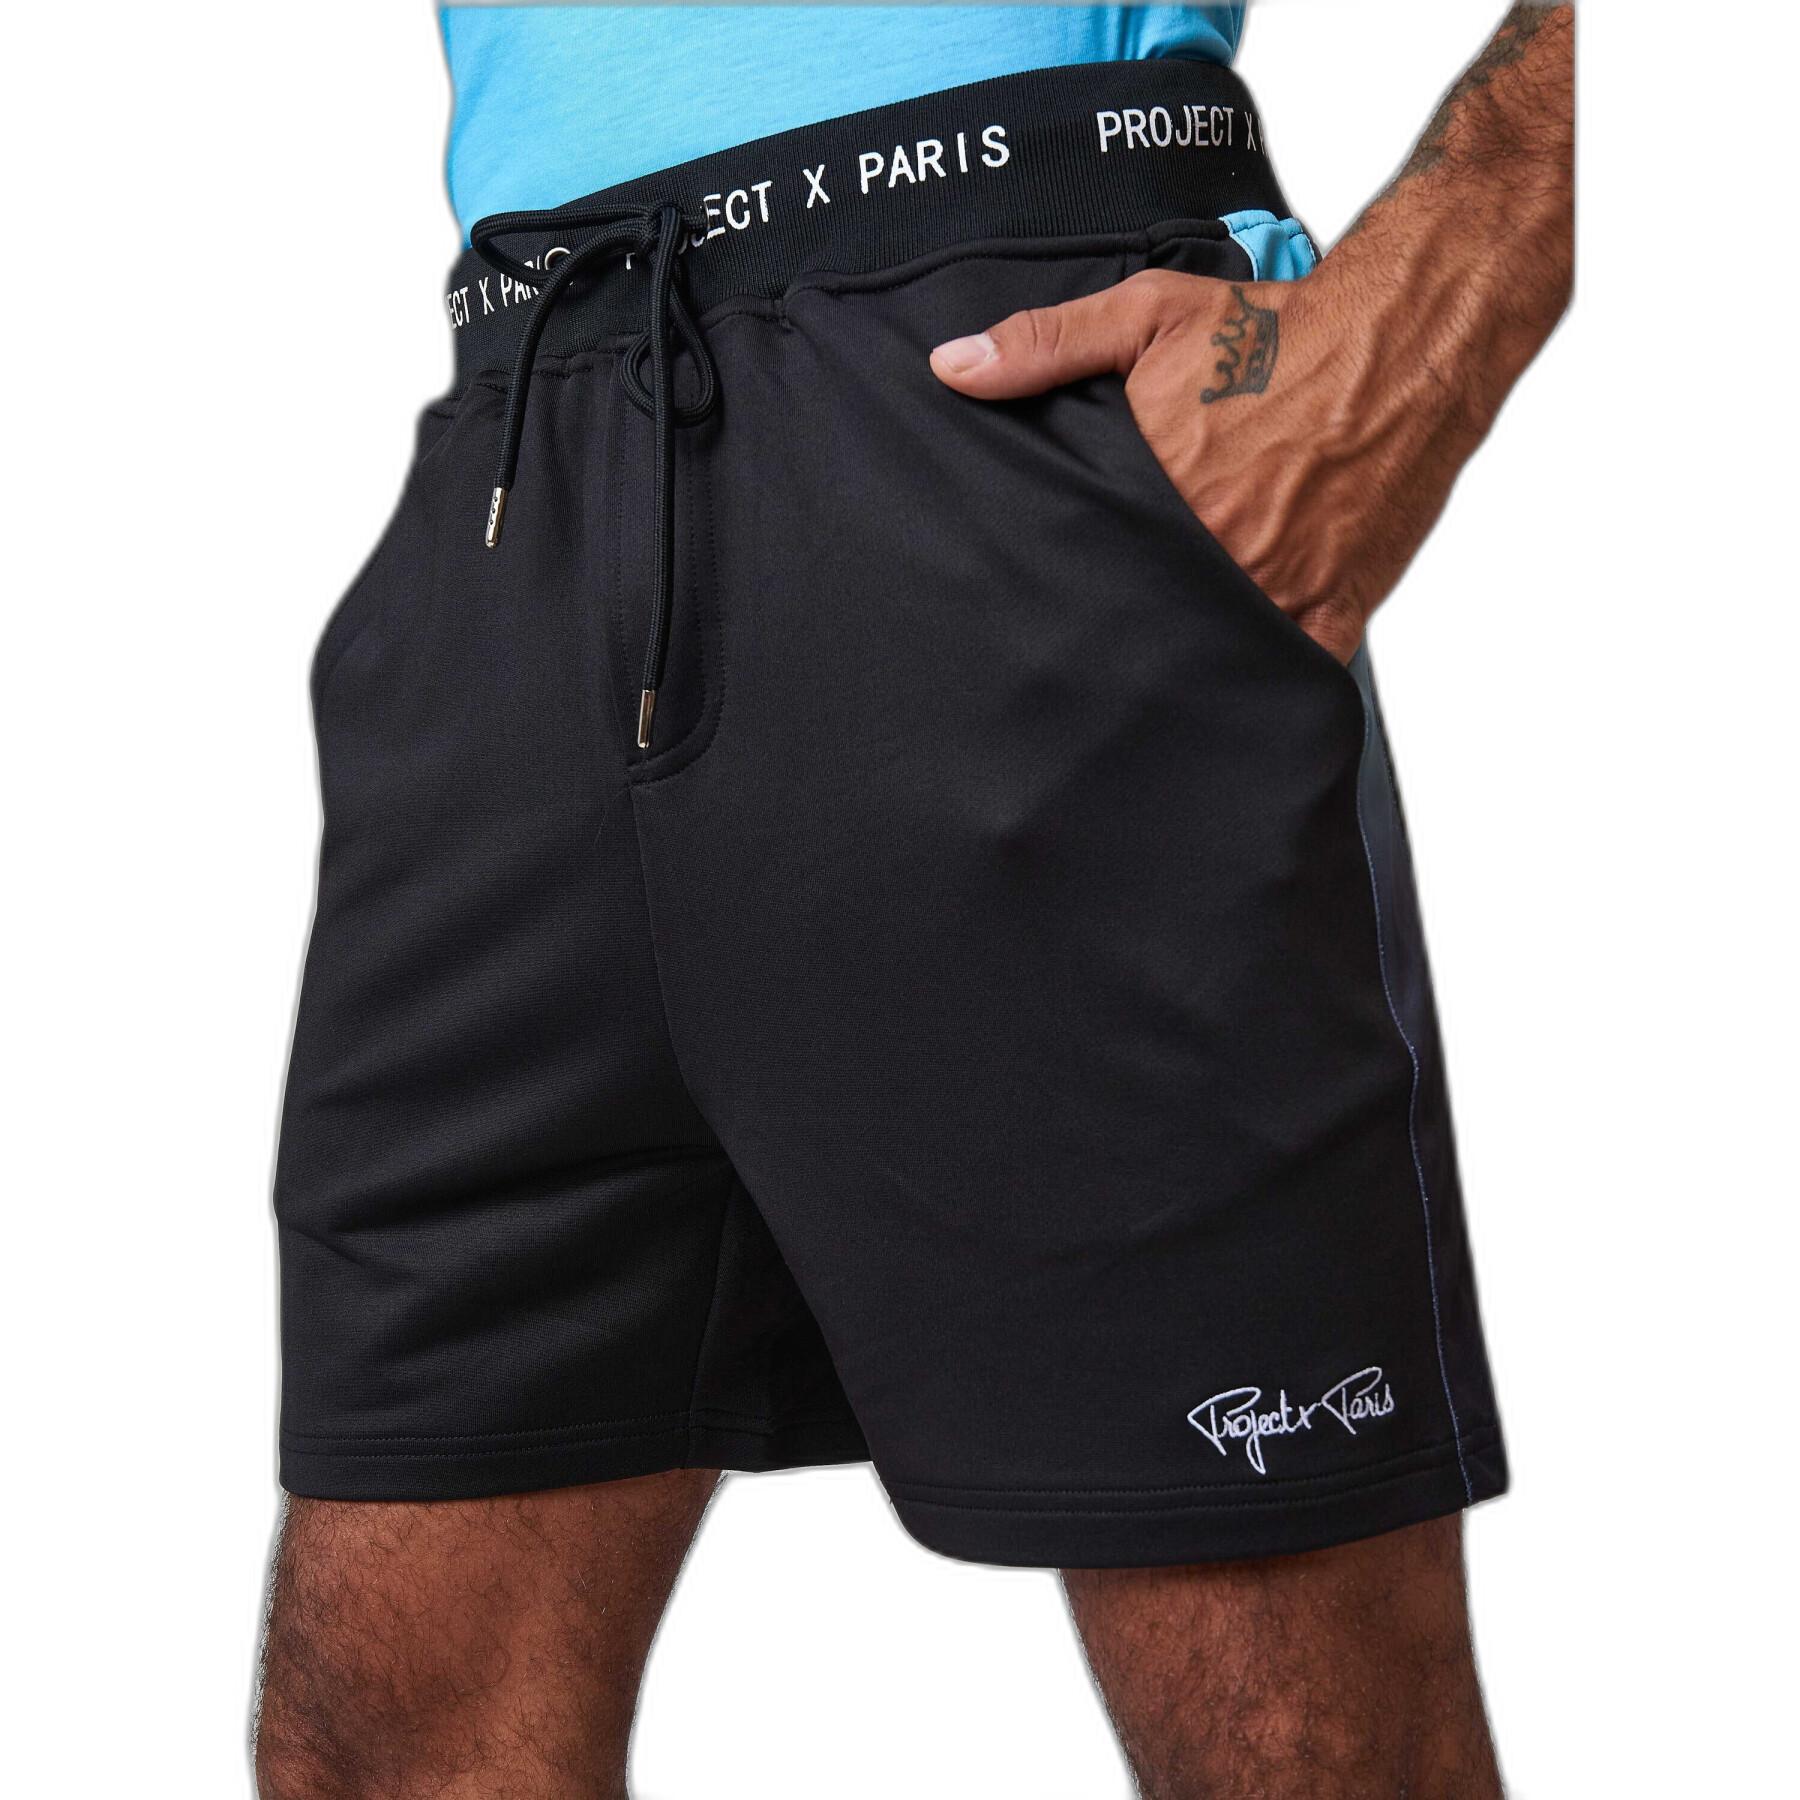 Mönstrade shorts med gradientband Project X Paris